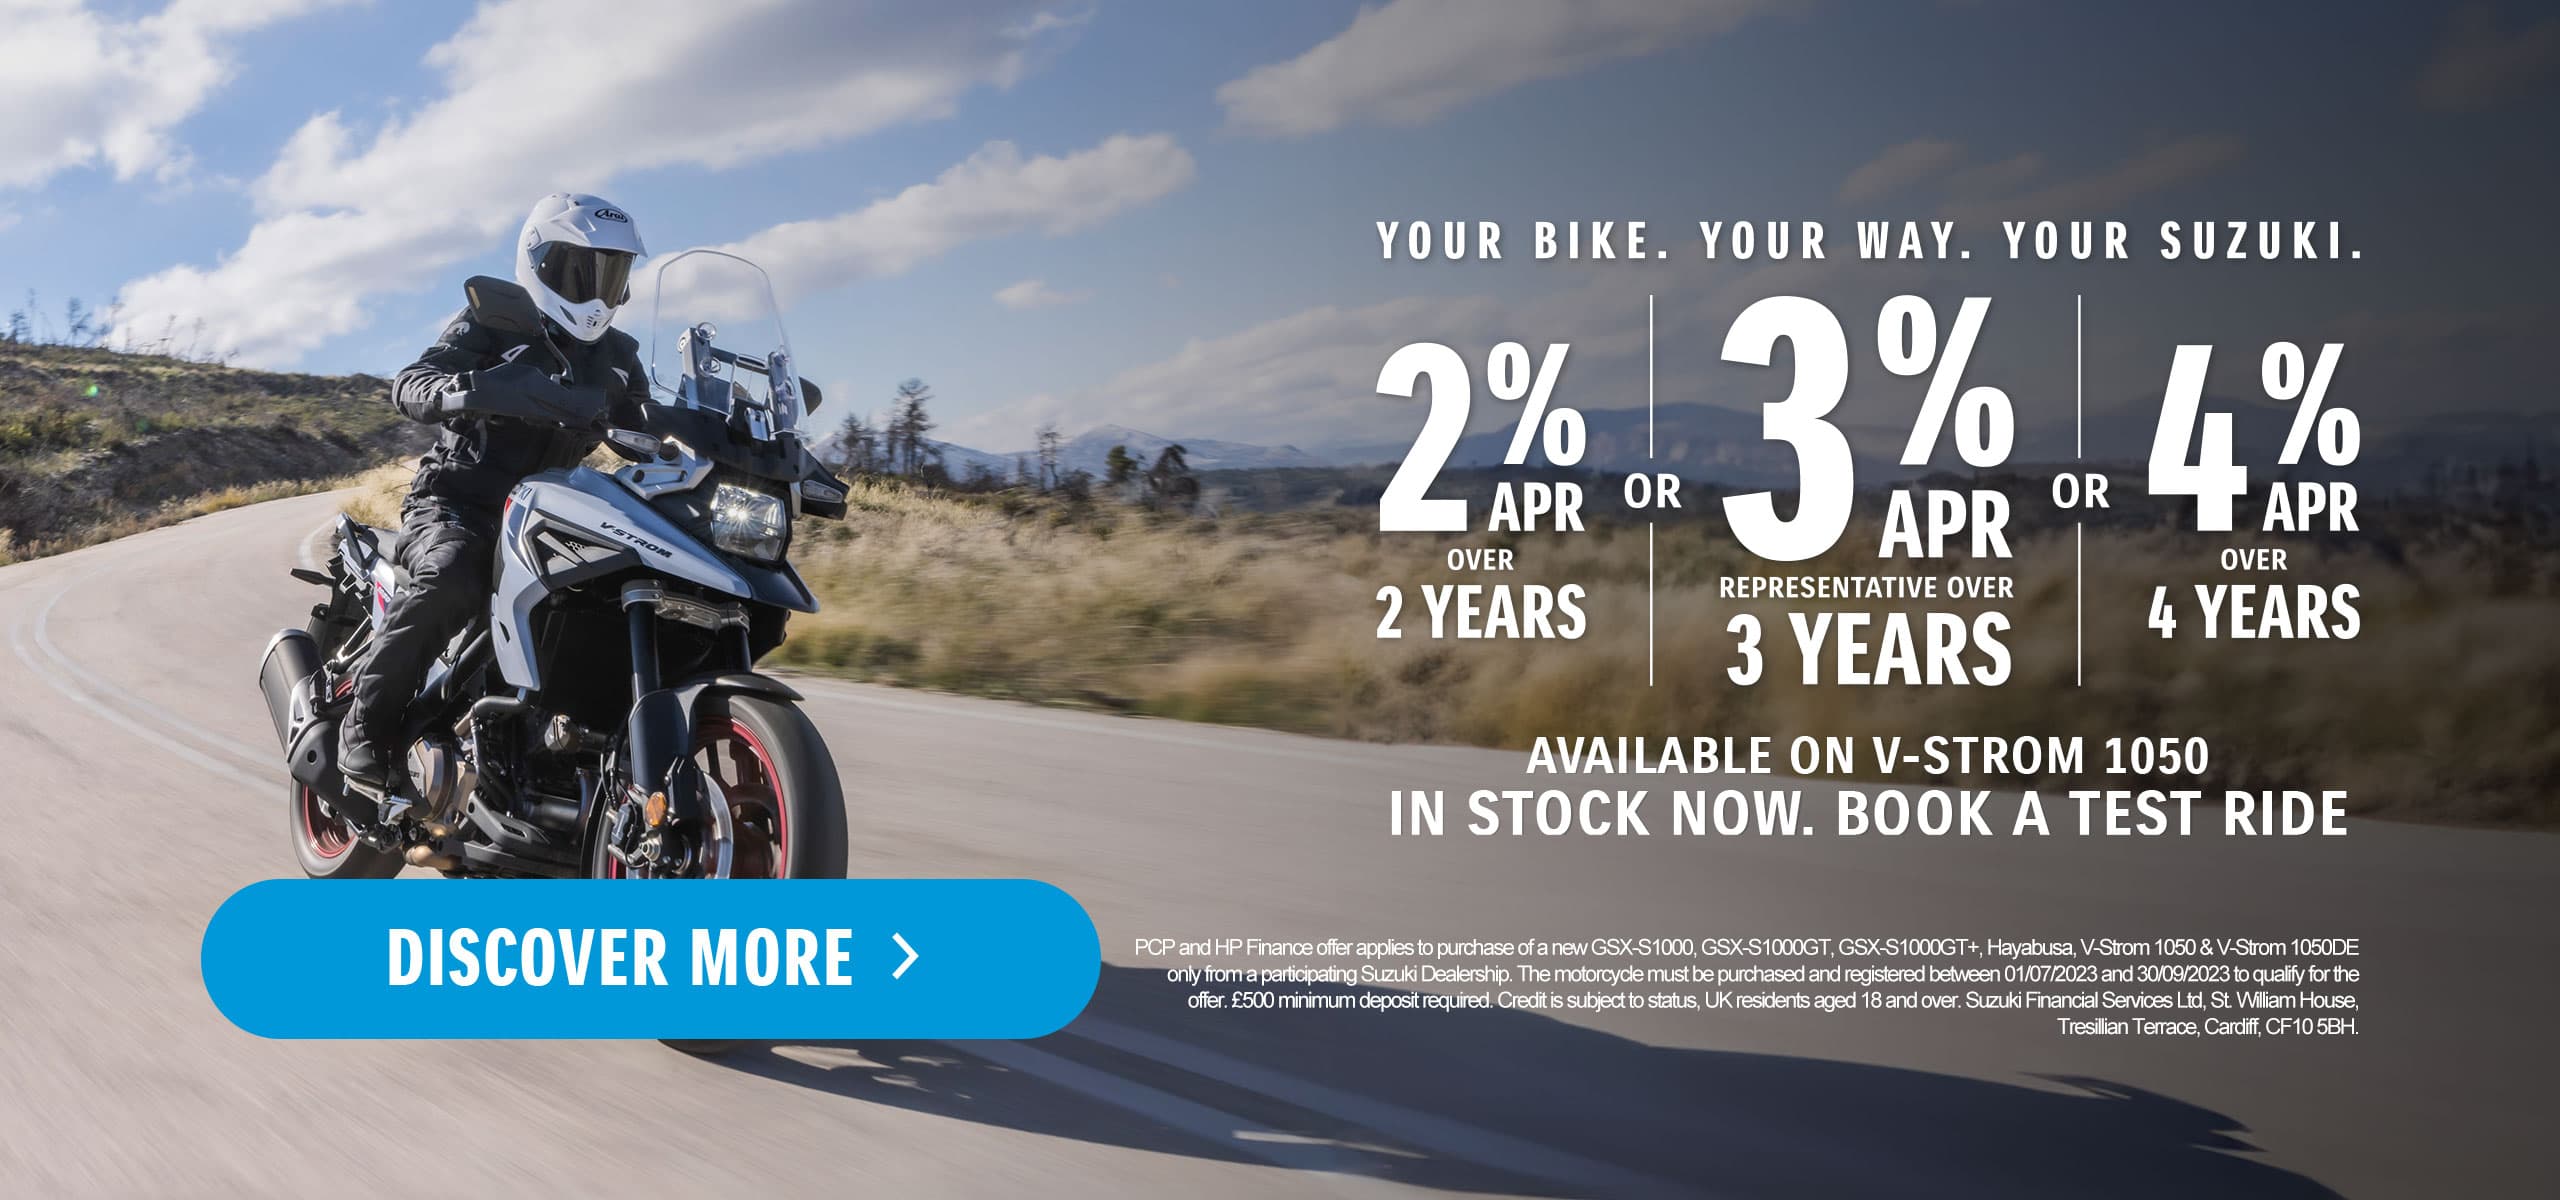 Your Bike. Your Way. Your Suzuki.